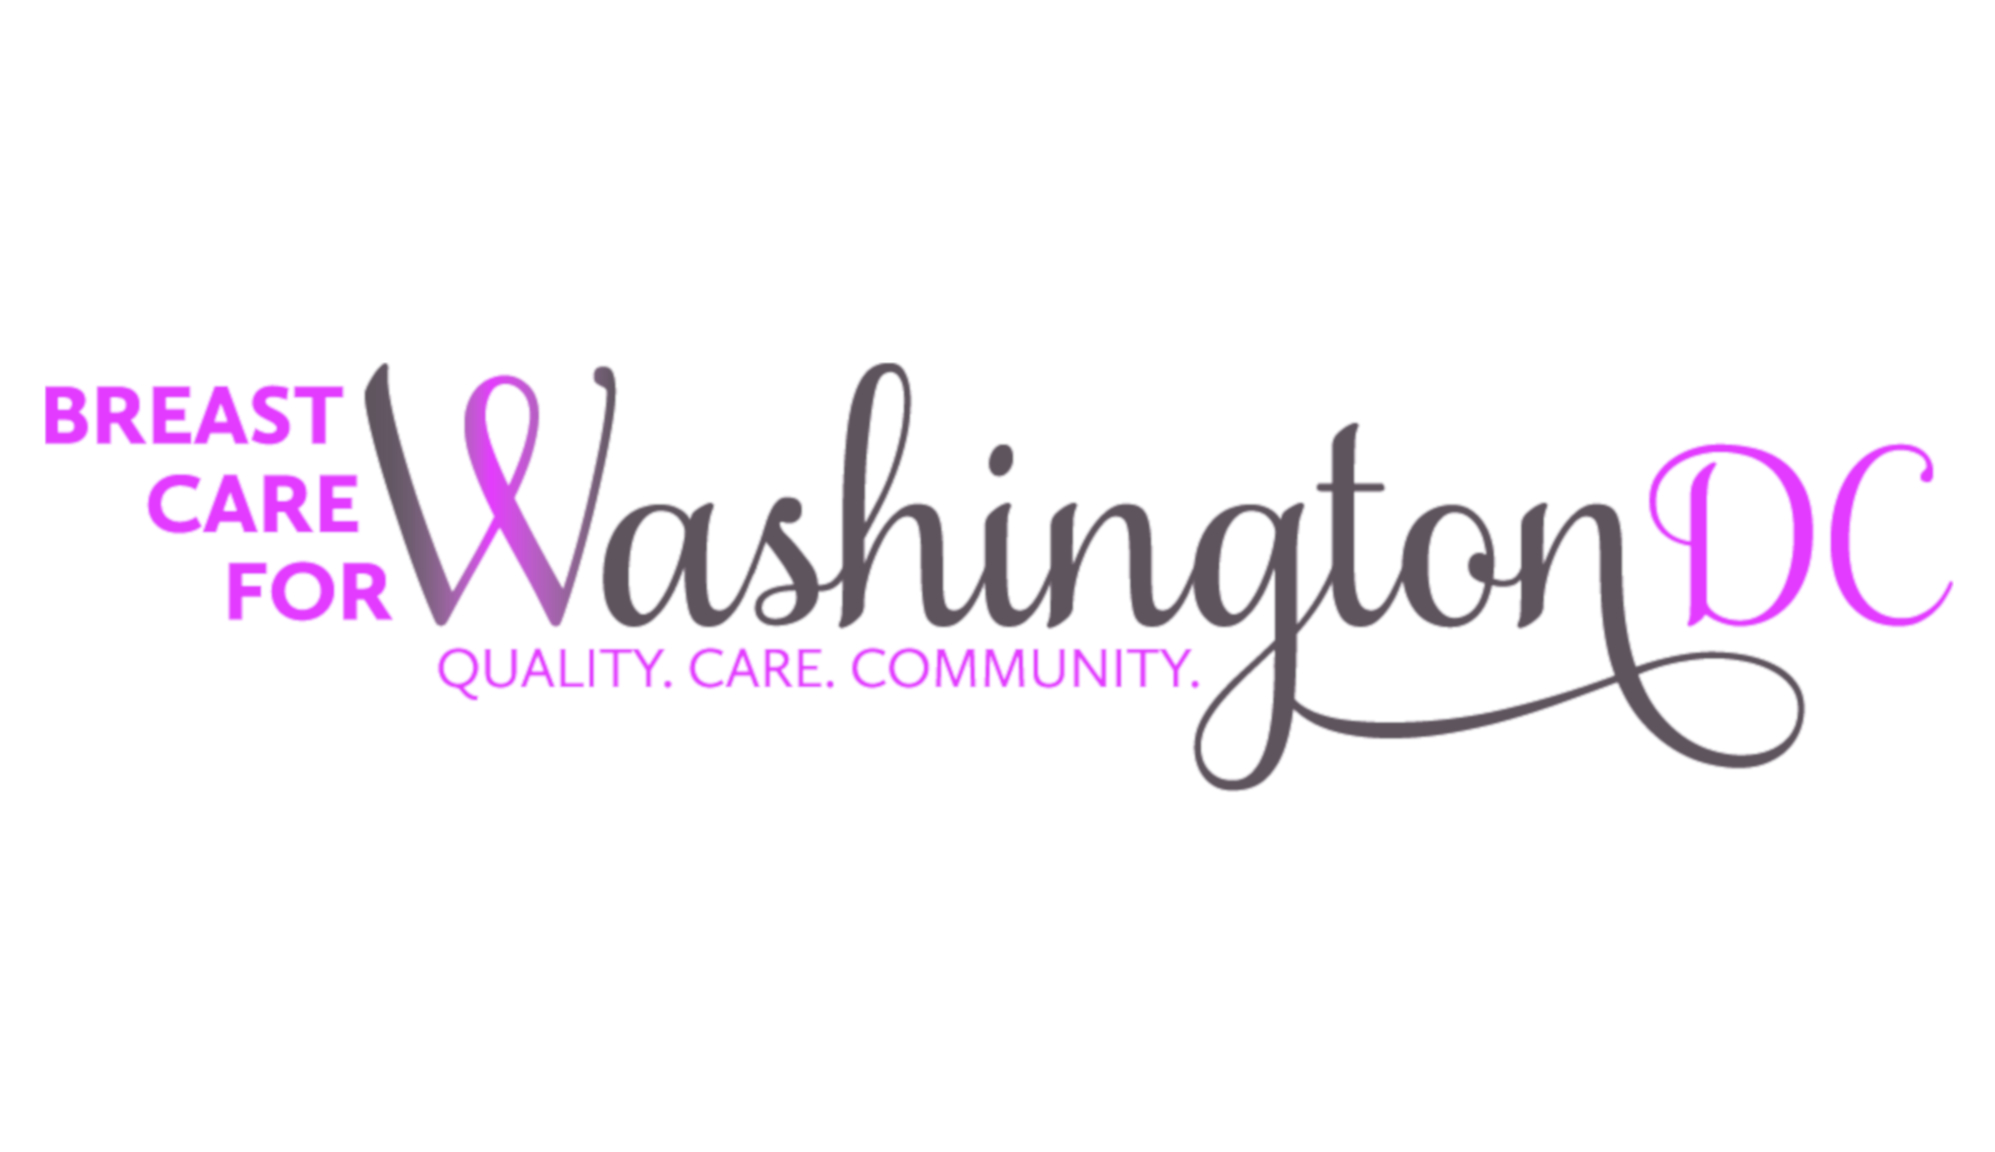 Breast Care for Washington DC logo